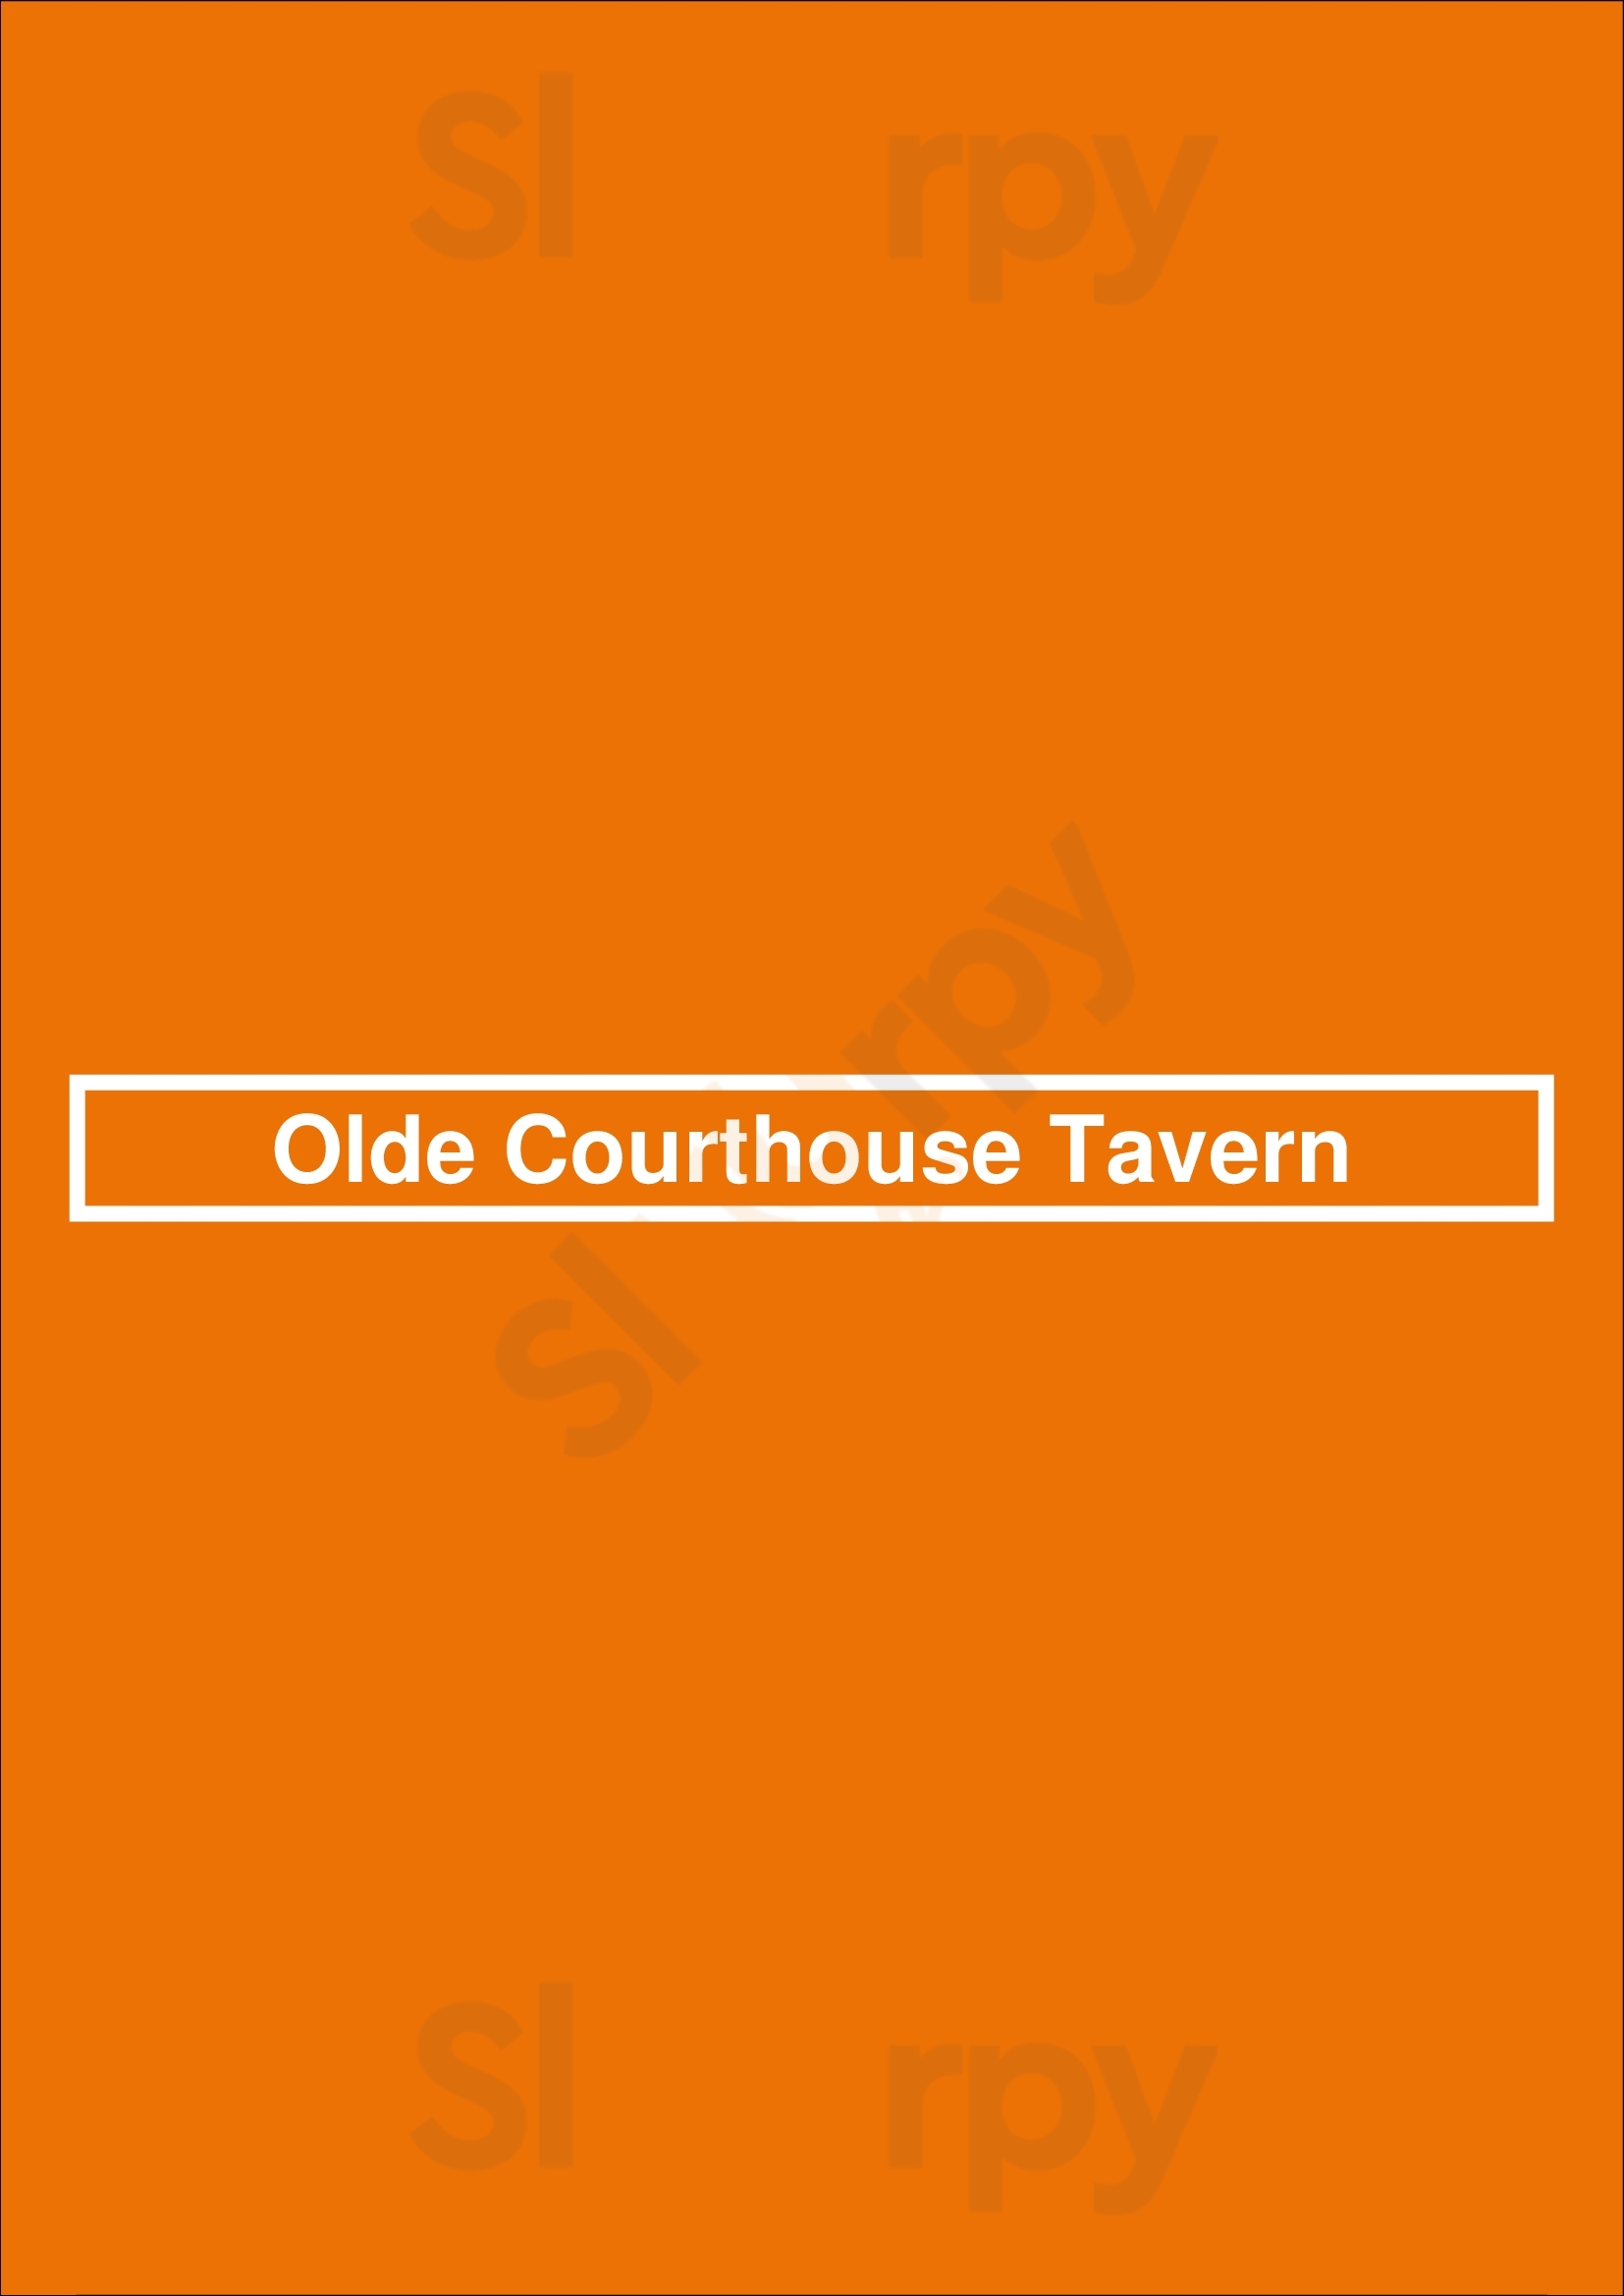 Olde Courthouse Tavern Fayetteville Menu - 1